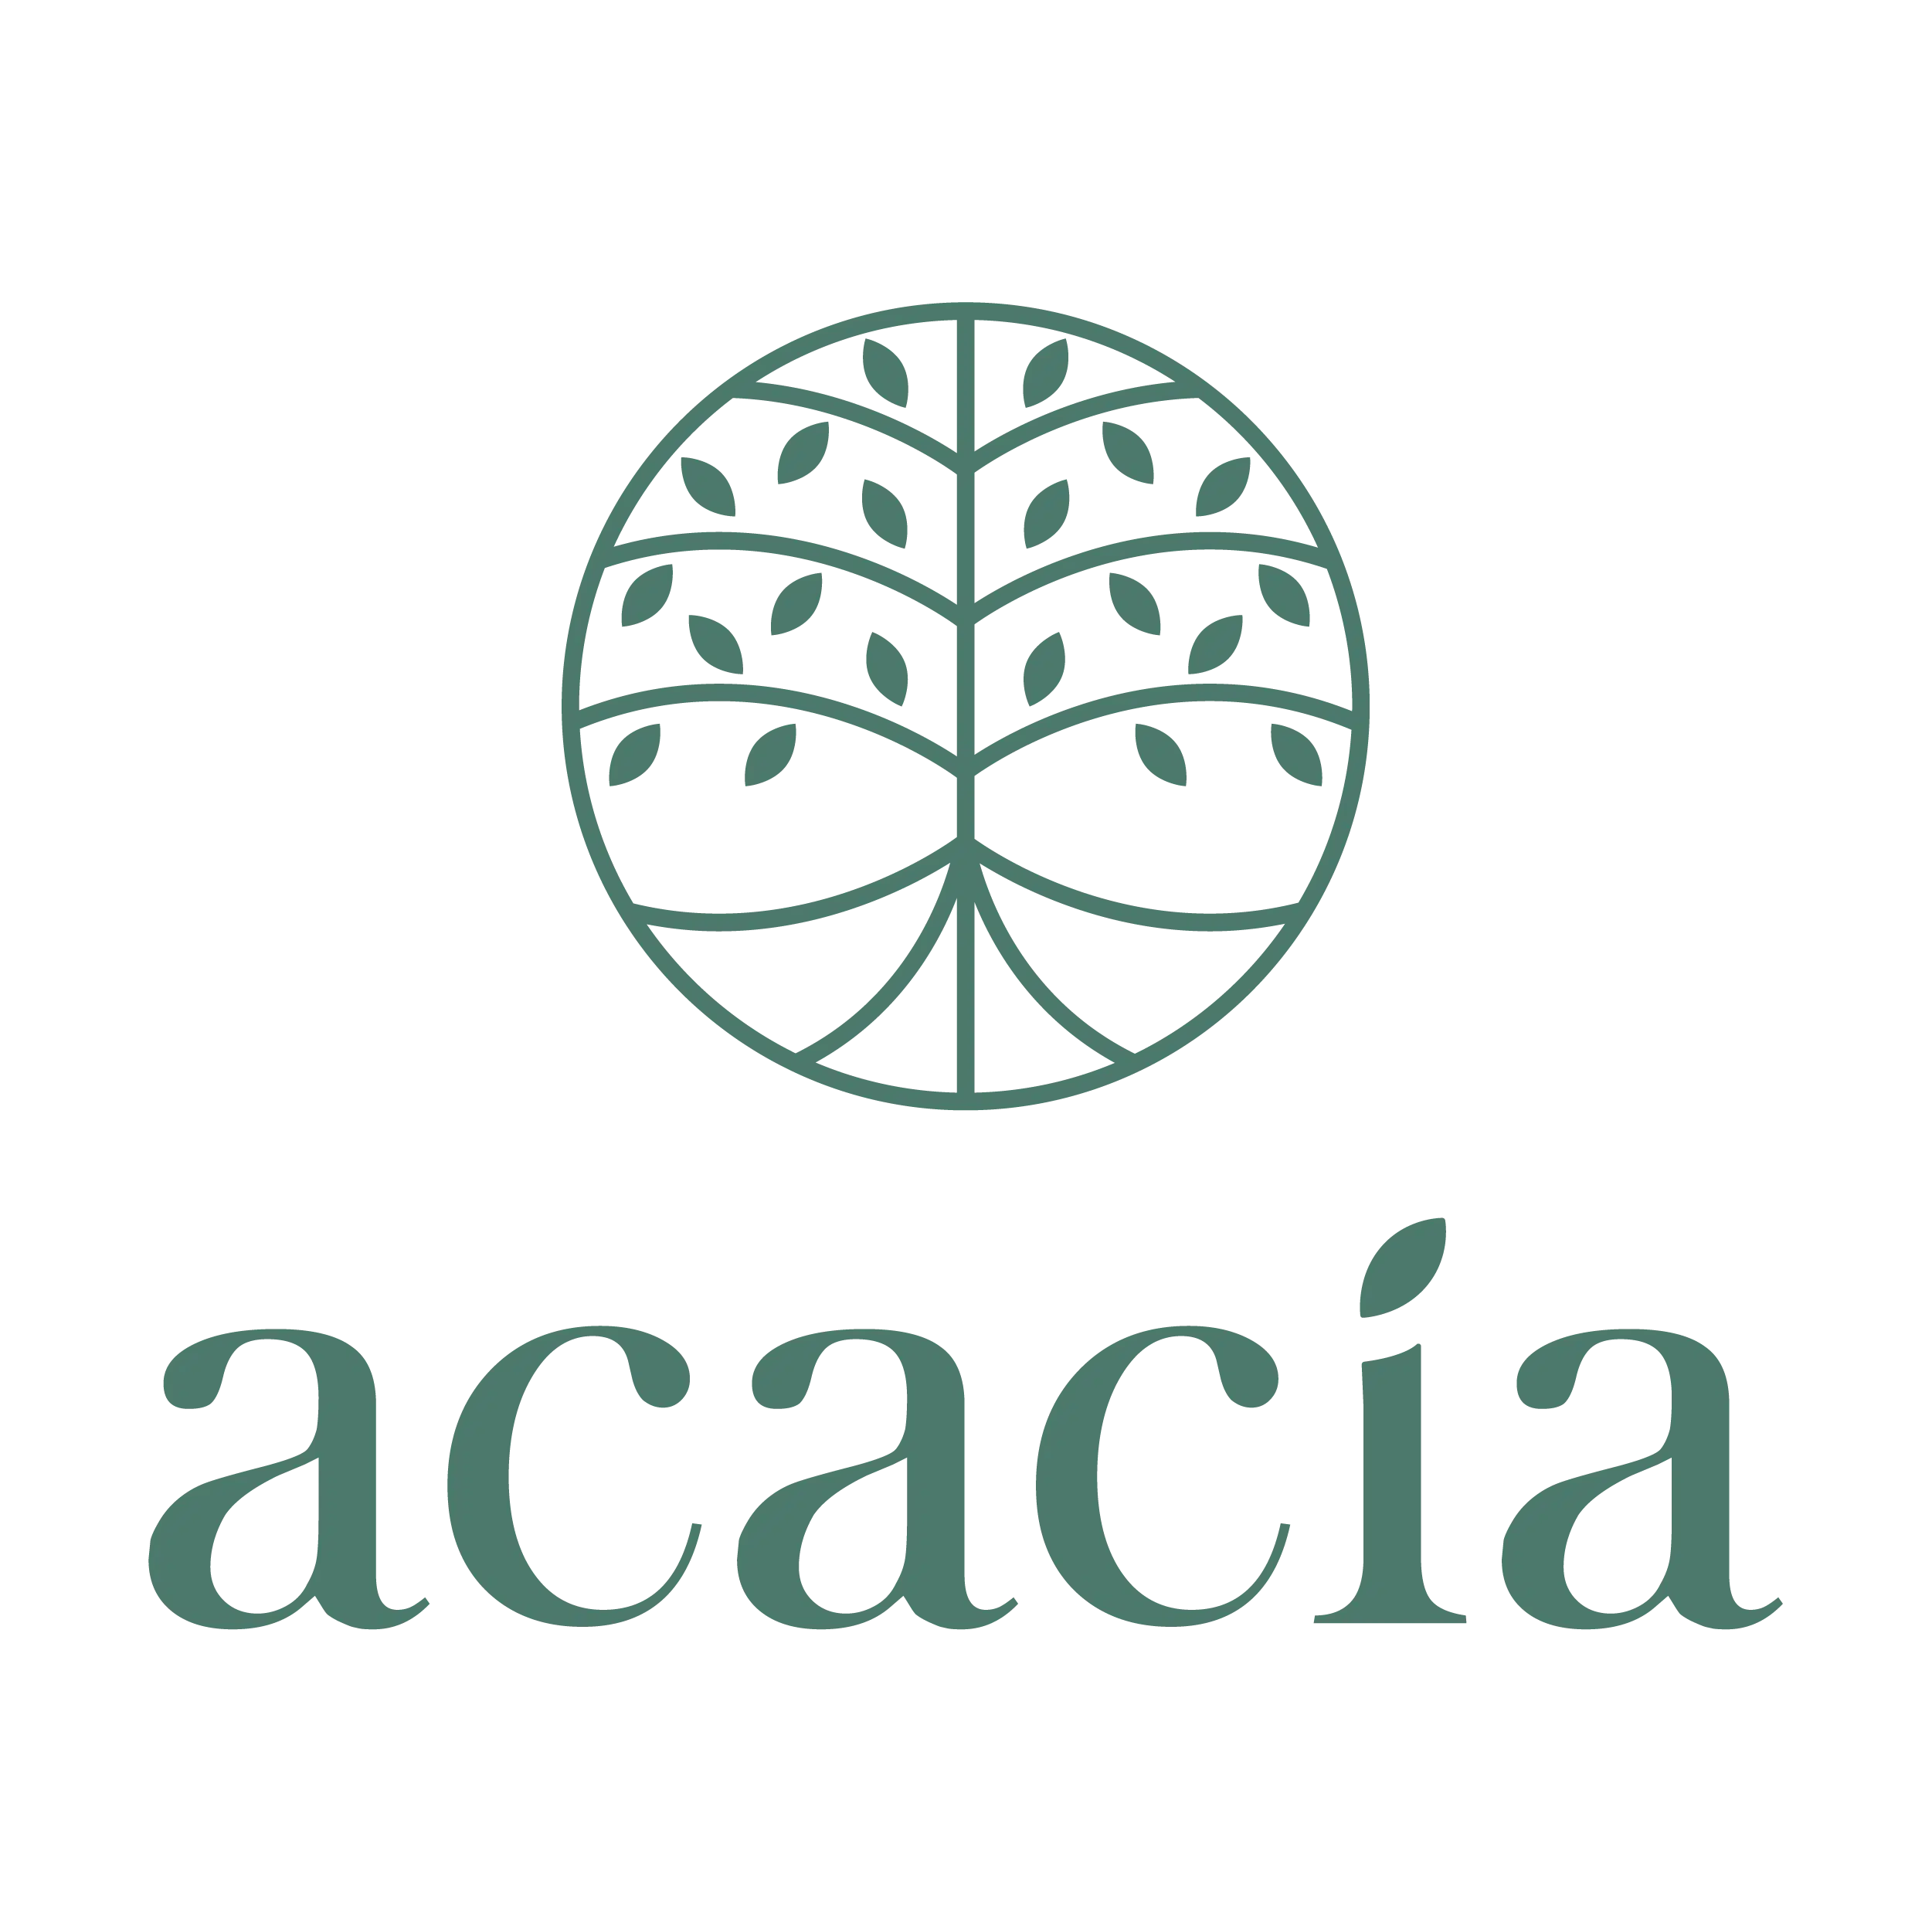 Acacia Management Services